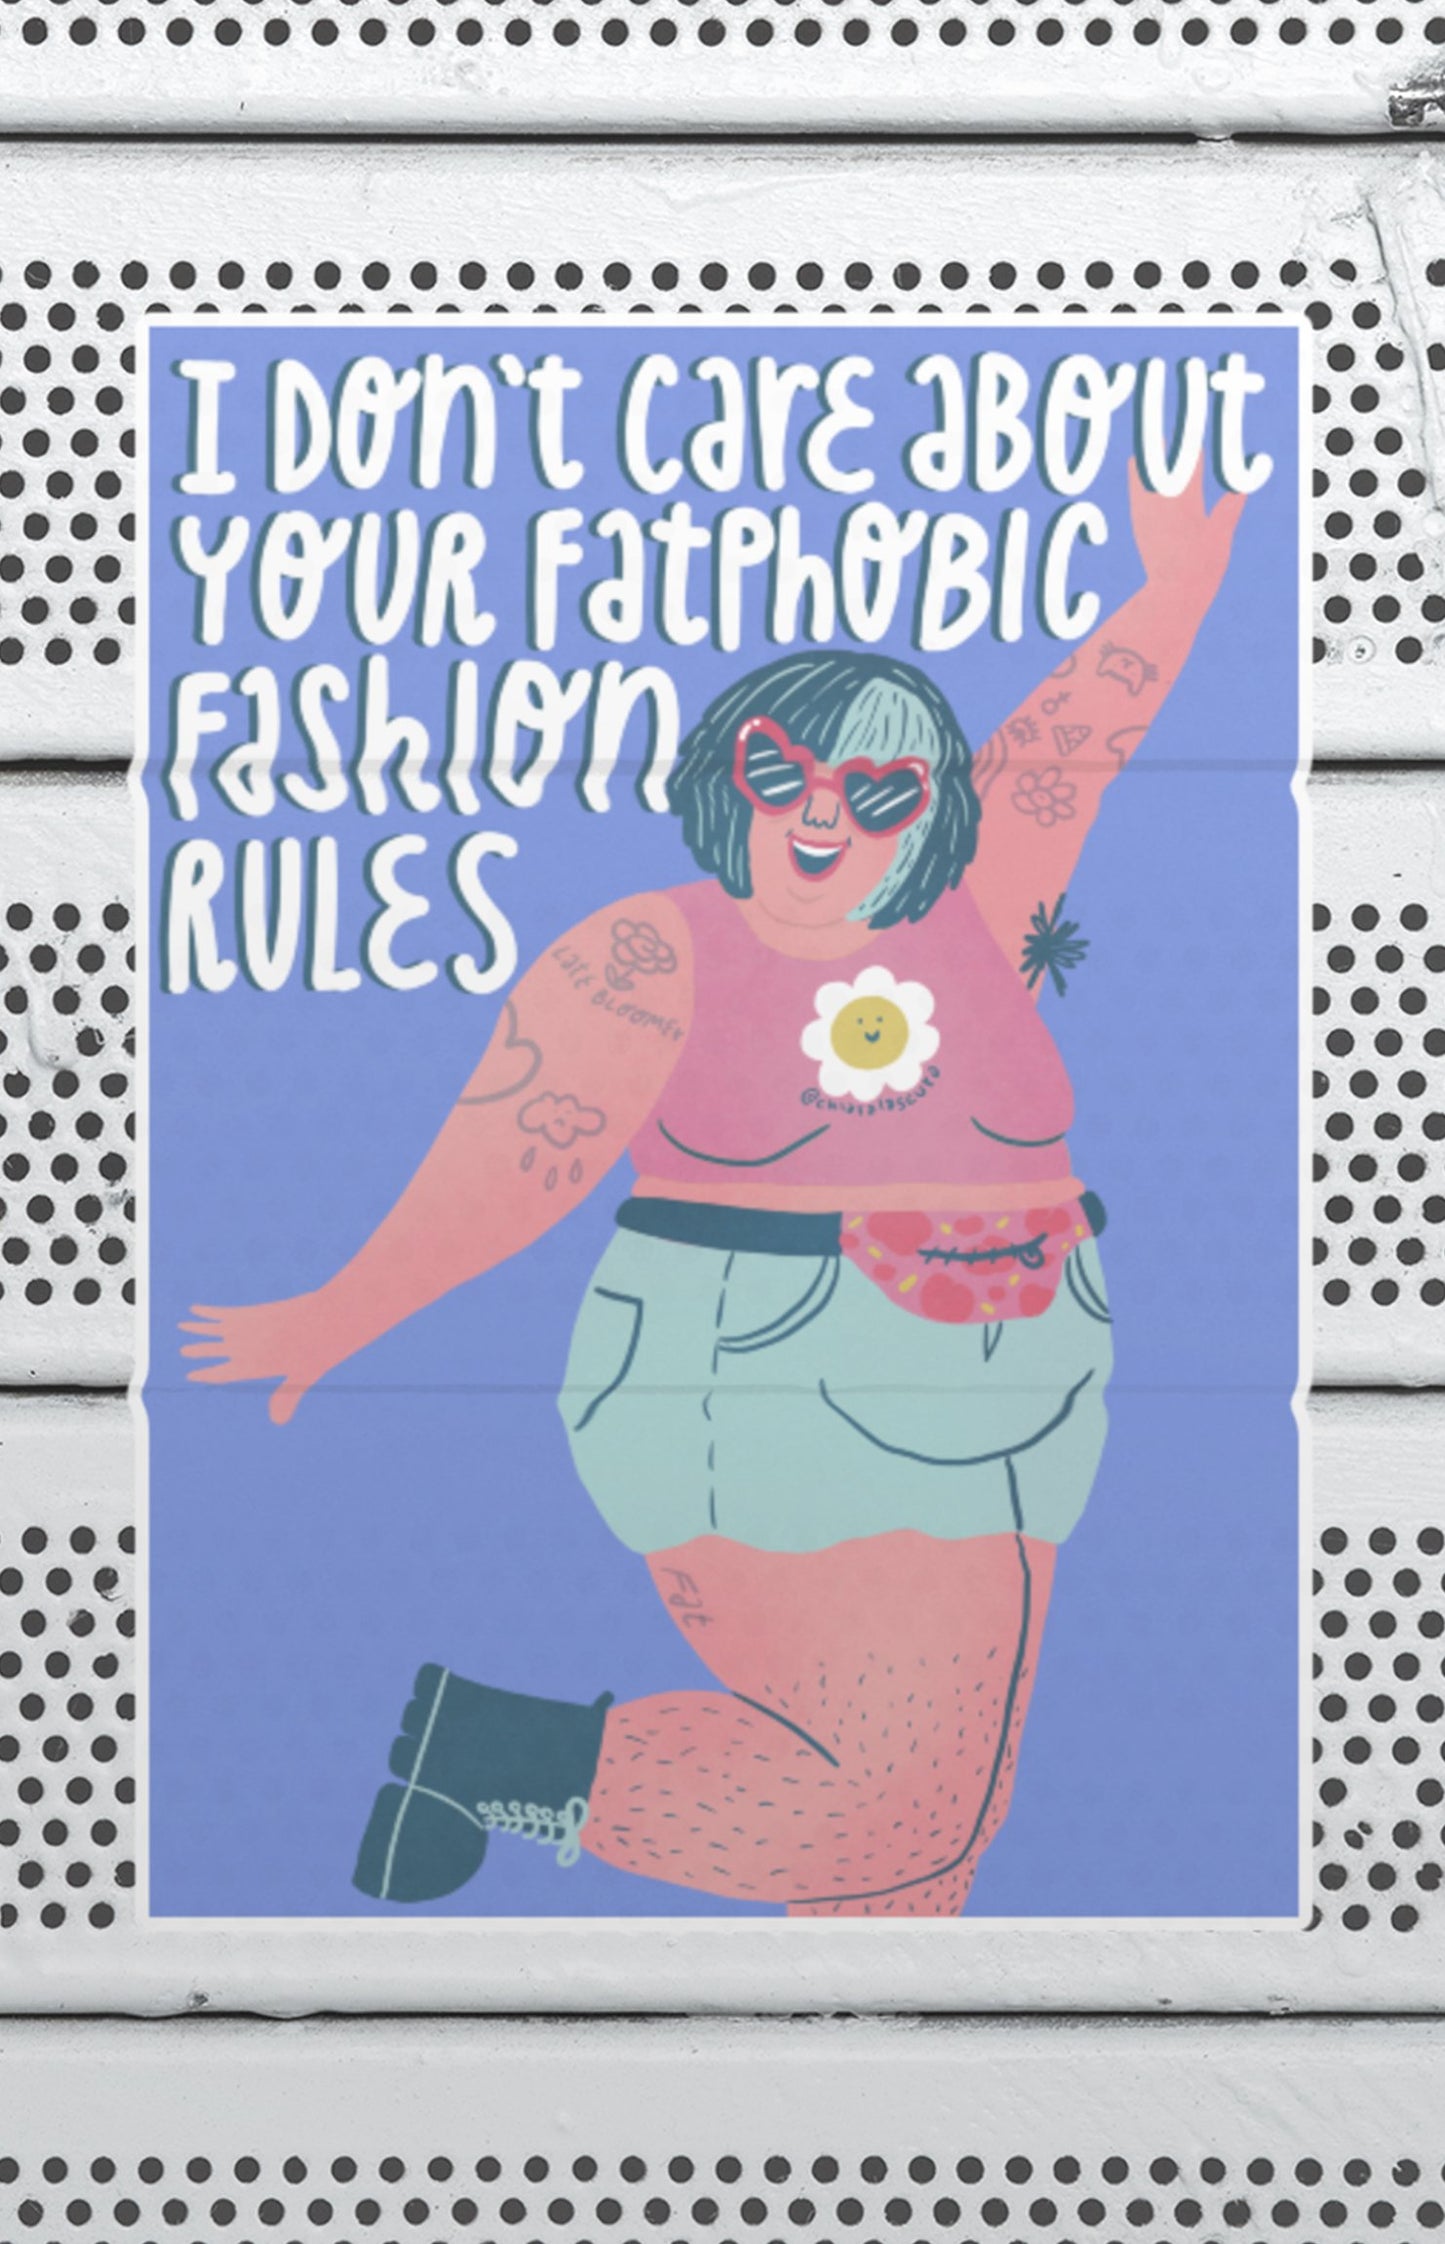 Fashion rules - adesivo